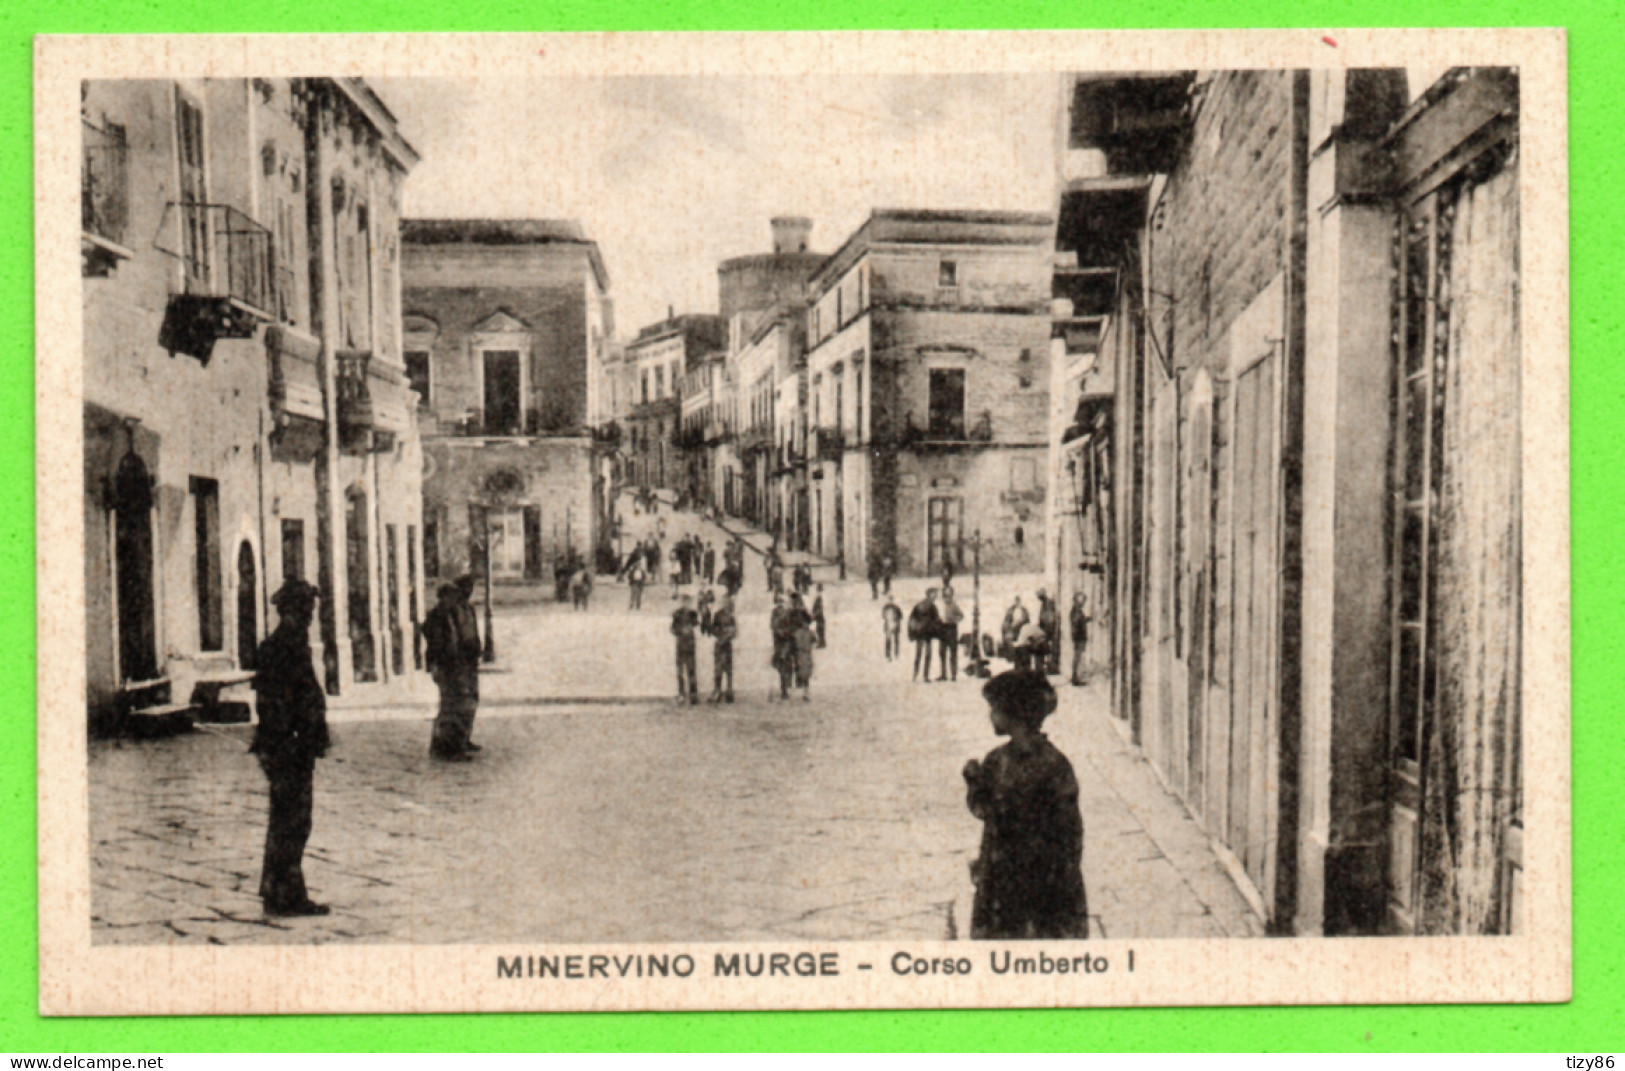 Minervino Murge - Corso Umberto I - Barletta